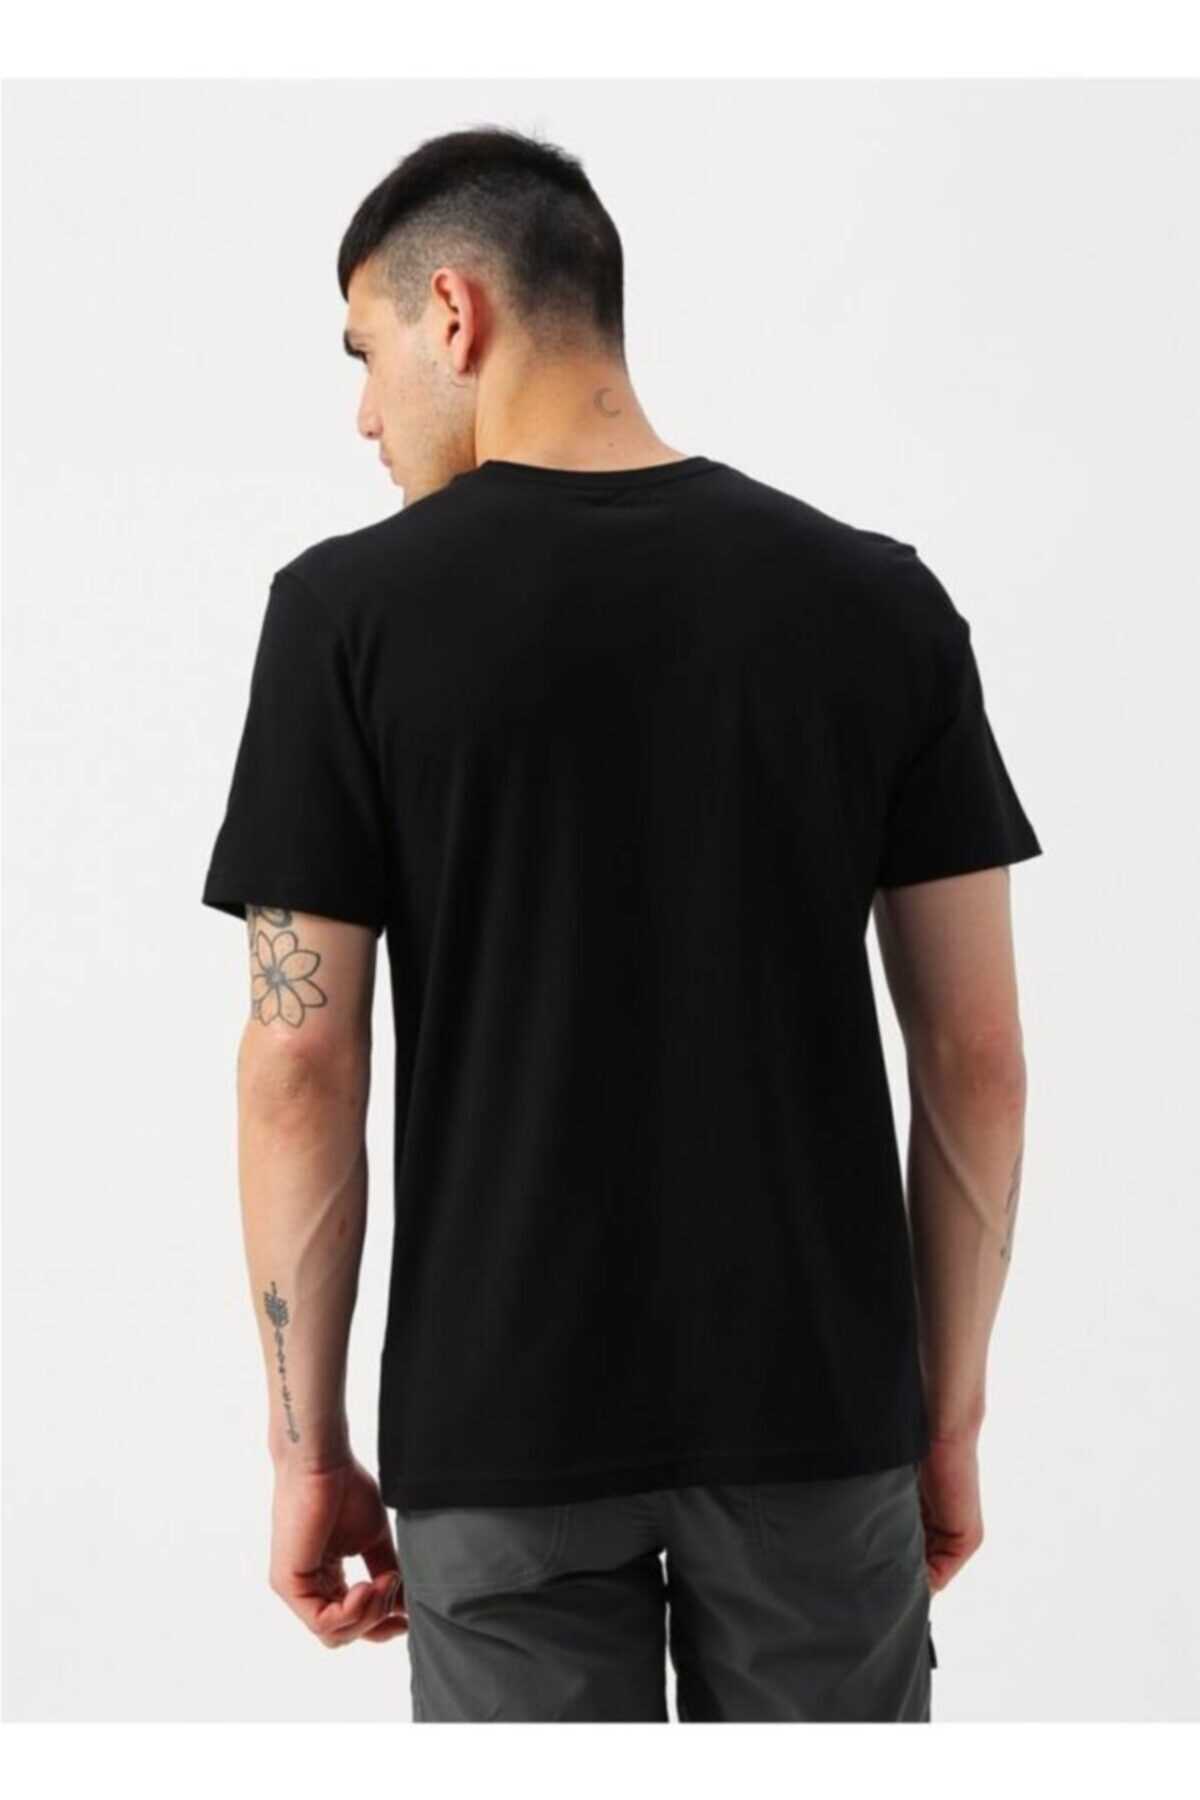 خرید اینترنتی تی شرت بلند برند کلمبیا رنگ مشکی کد ty98522696